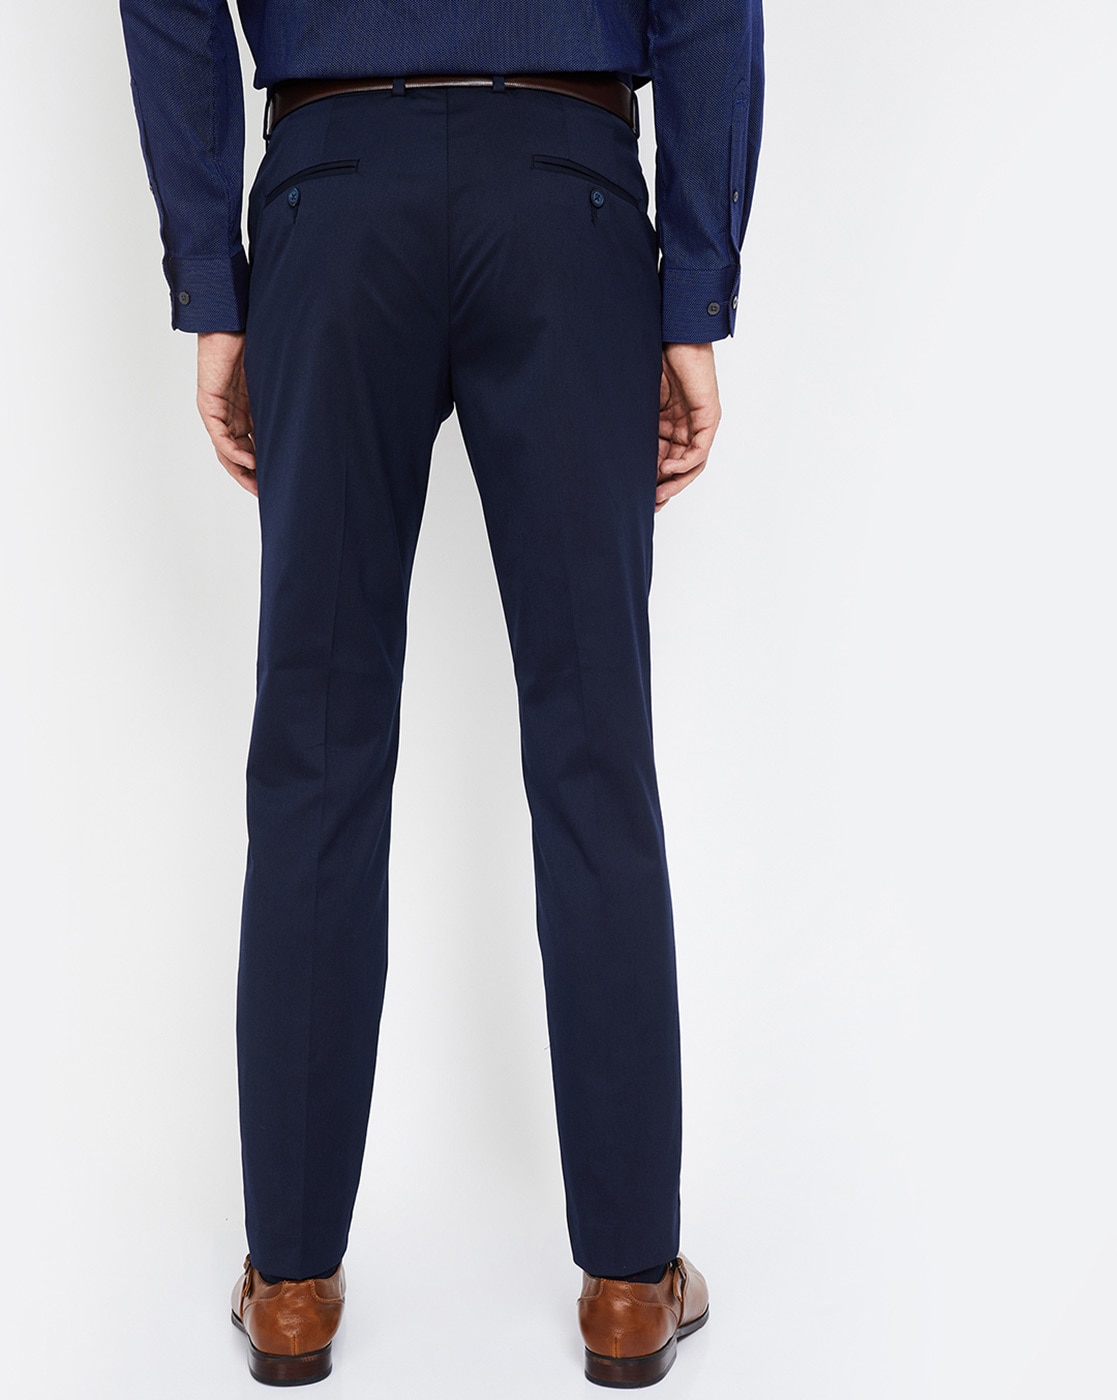 Occasions  Pale Blue Slim Fit Suit Trousers  SuitDirectcouk